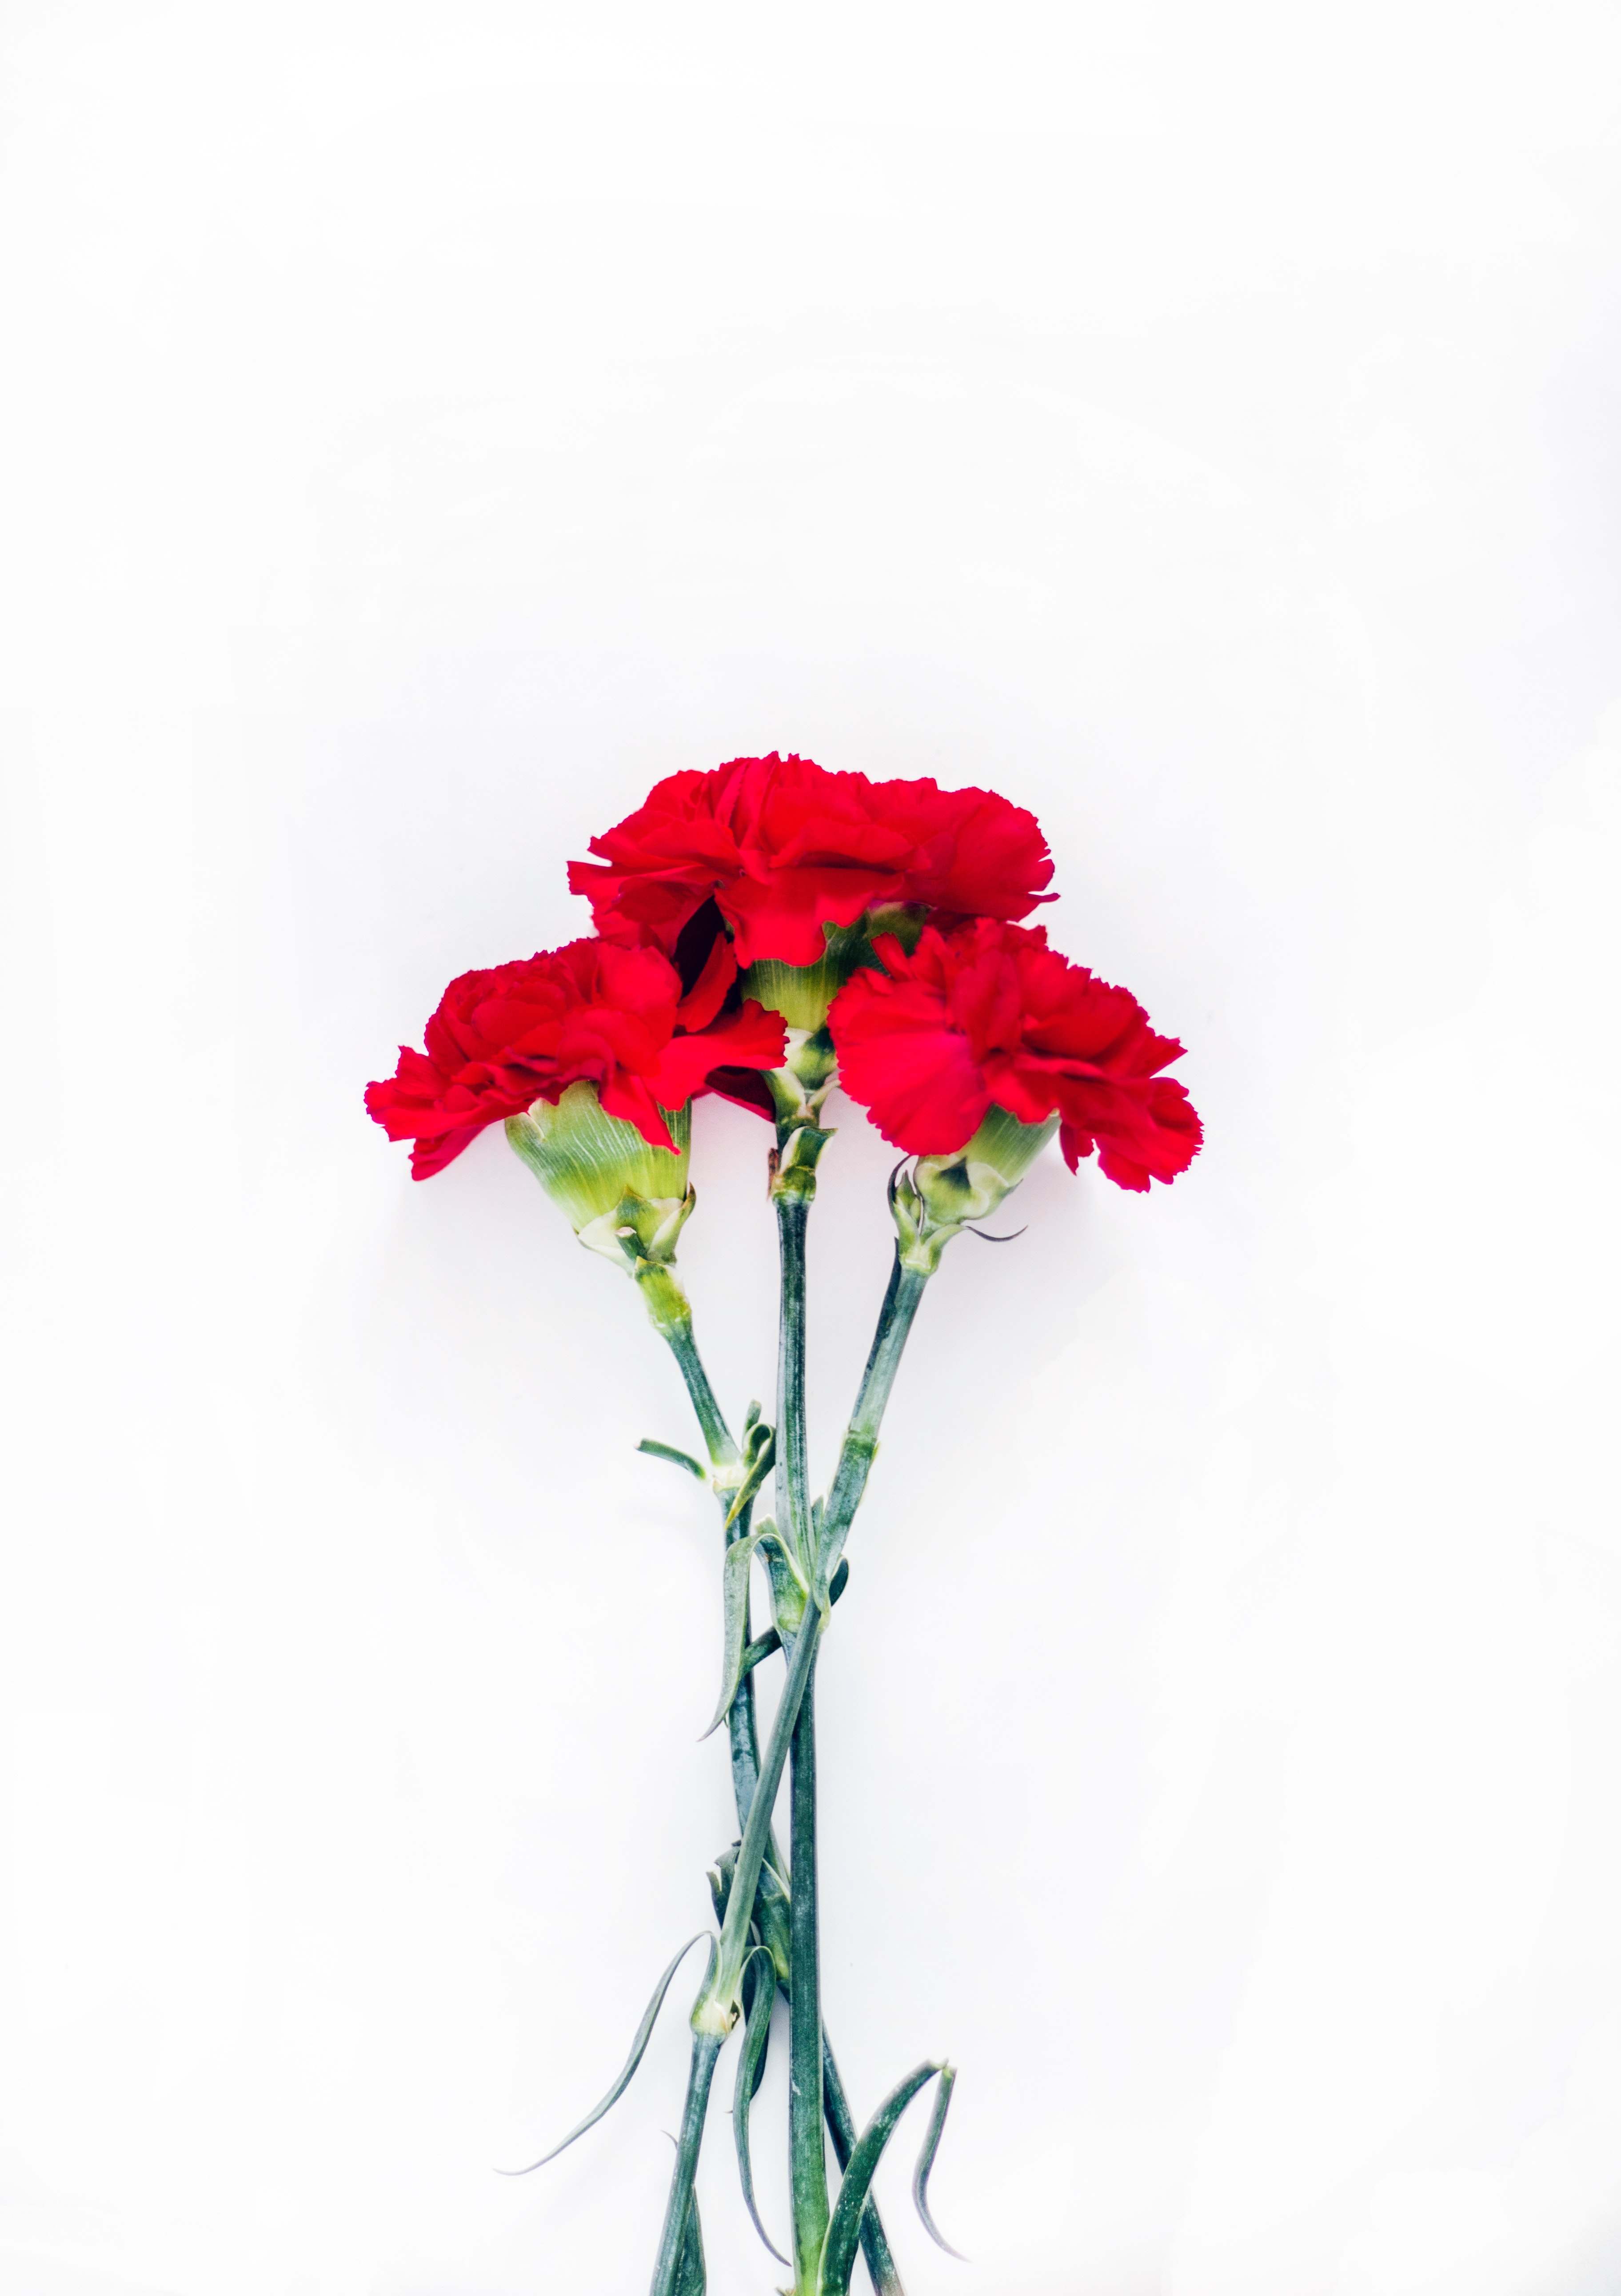 394+ Best Free Carnation Stock Photos & Image · 100% Royalty